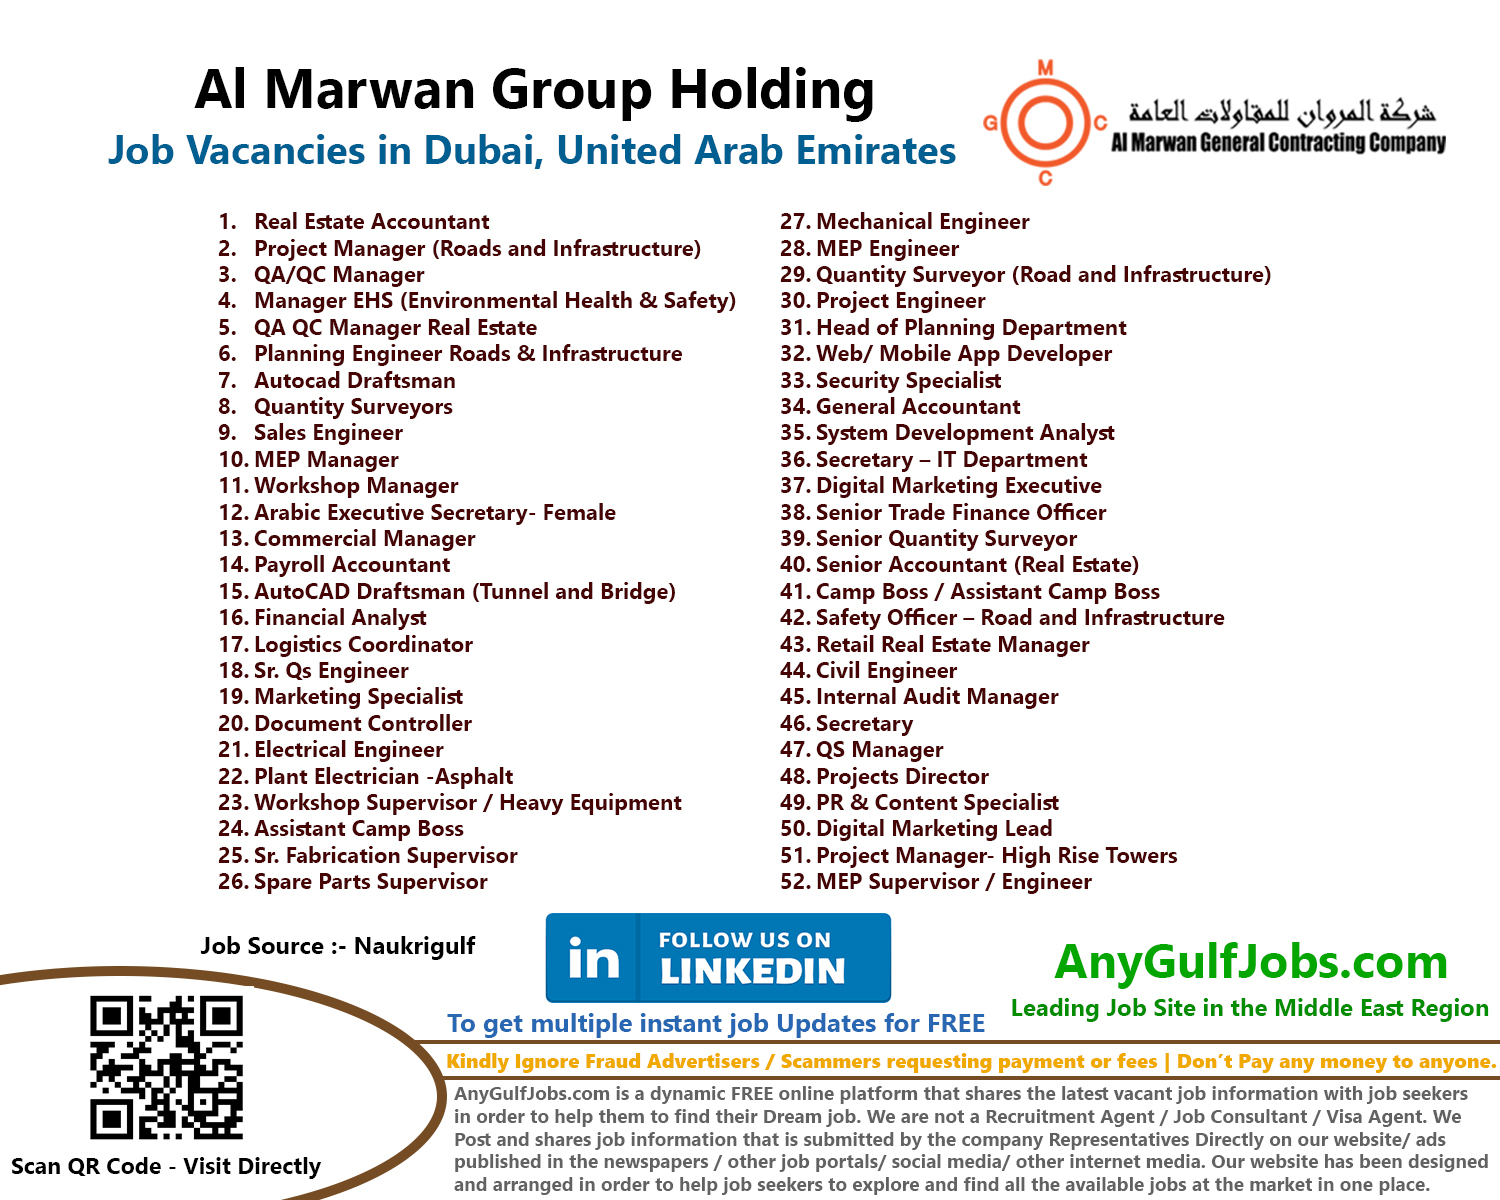 Al Marwan Group Holding Job Vacancies - Dubai, UAE